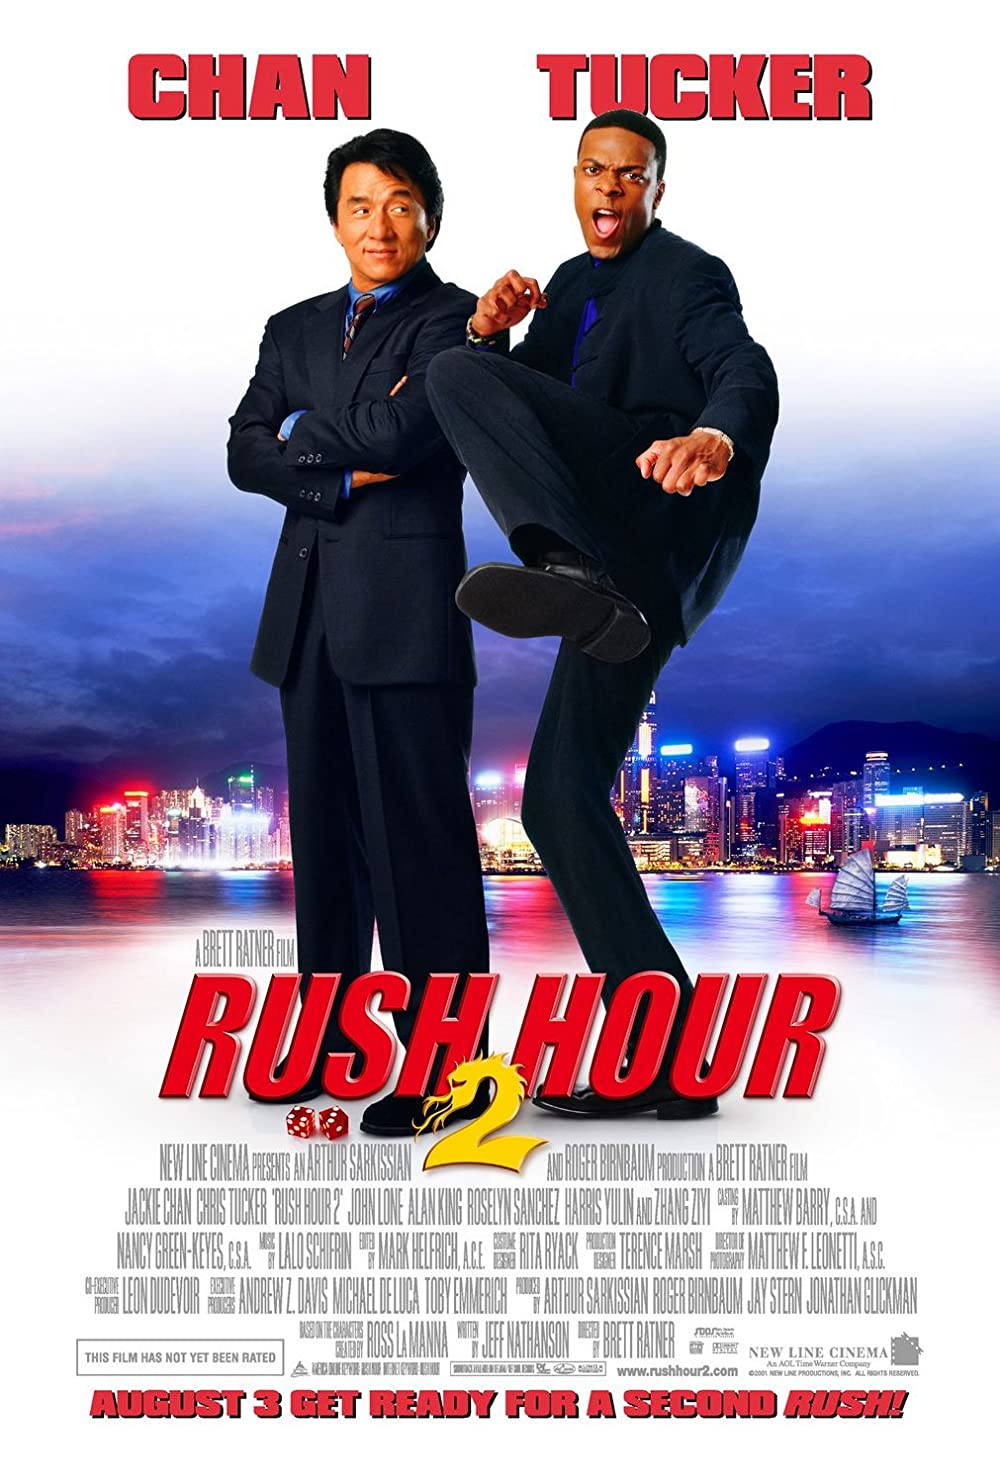 Filmbeschreibung zu Rush Hour 2